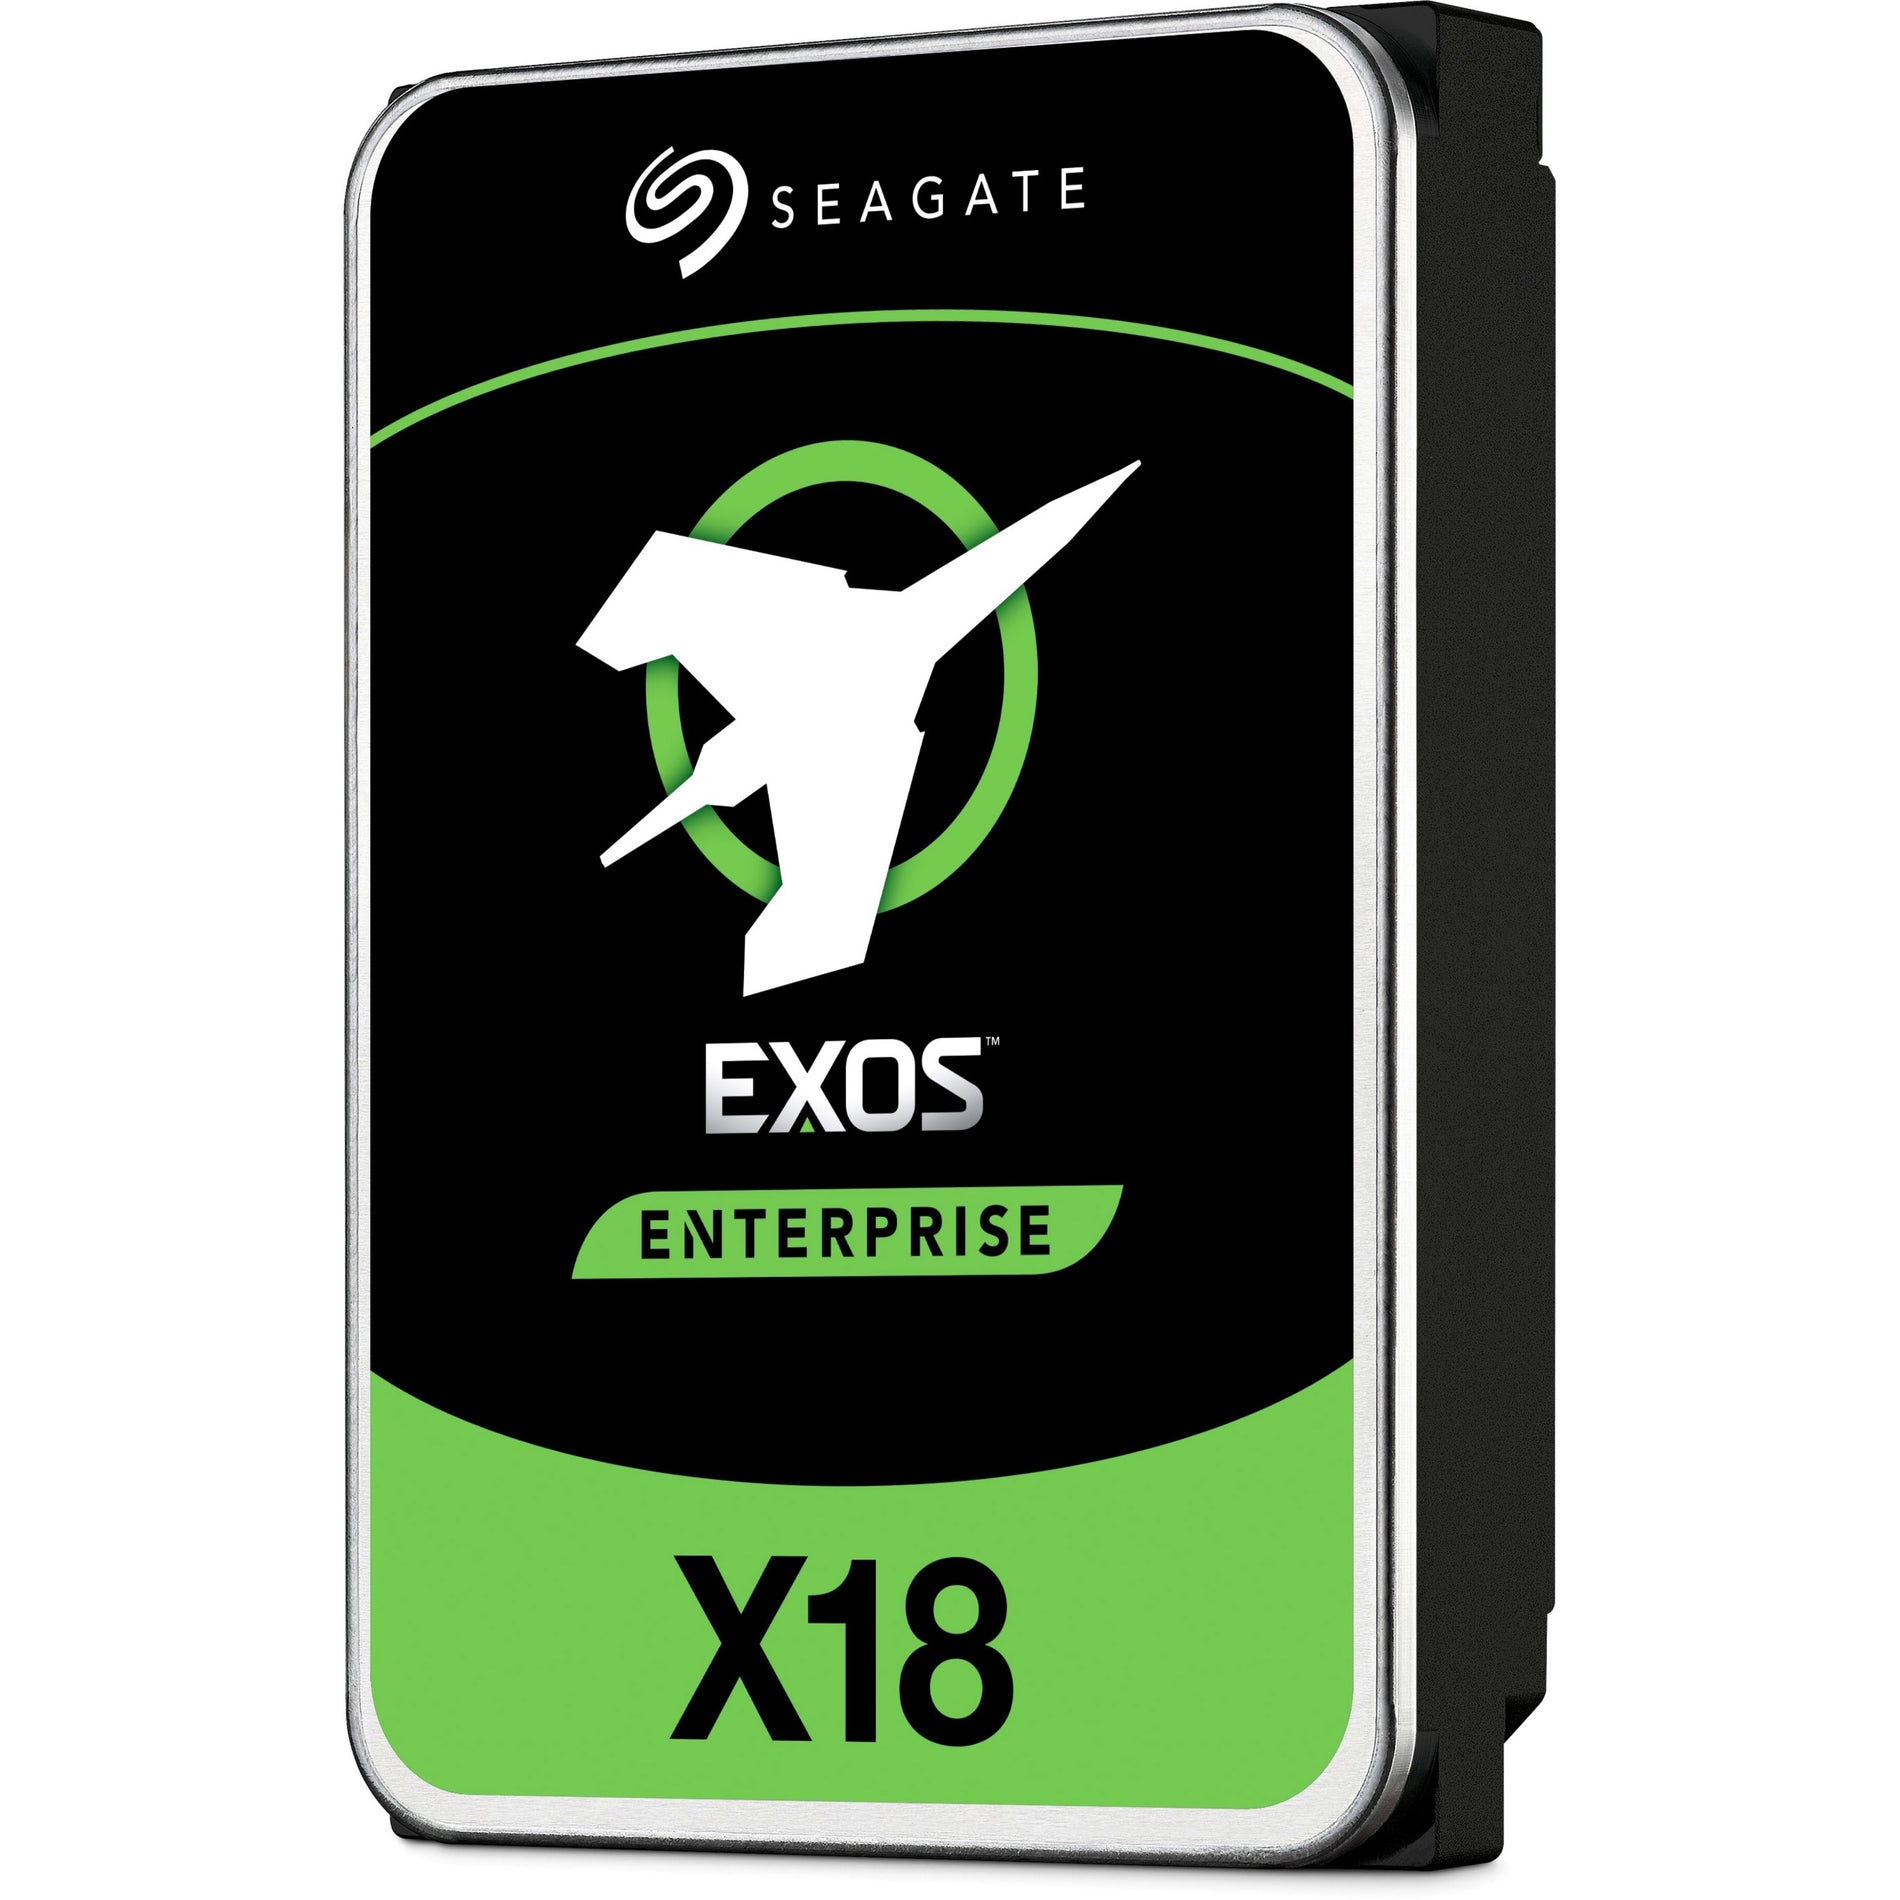 Seagate ST12000NM001J Exos X18 12TB Hard Drive, 7200RPM SATA, 5 Year Warranty